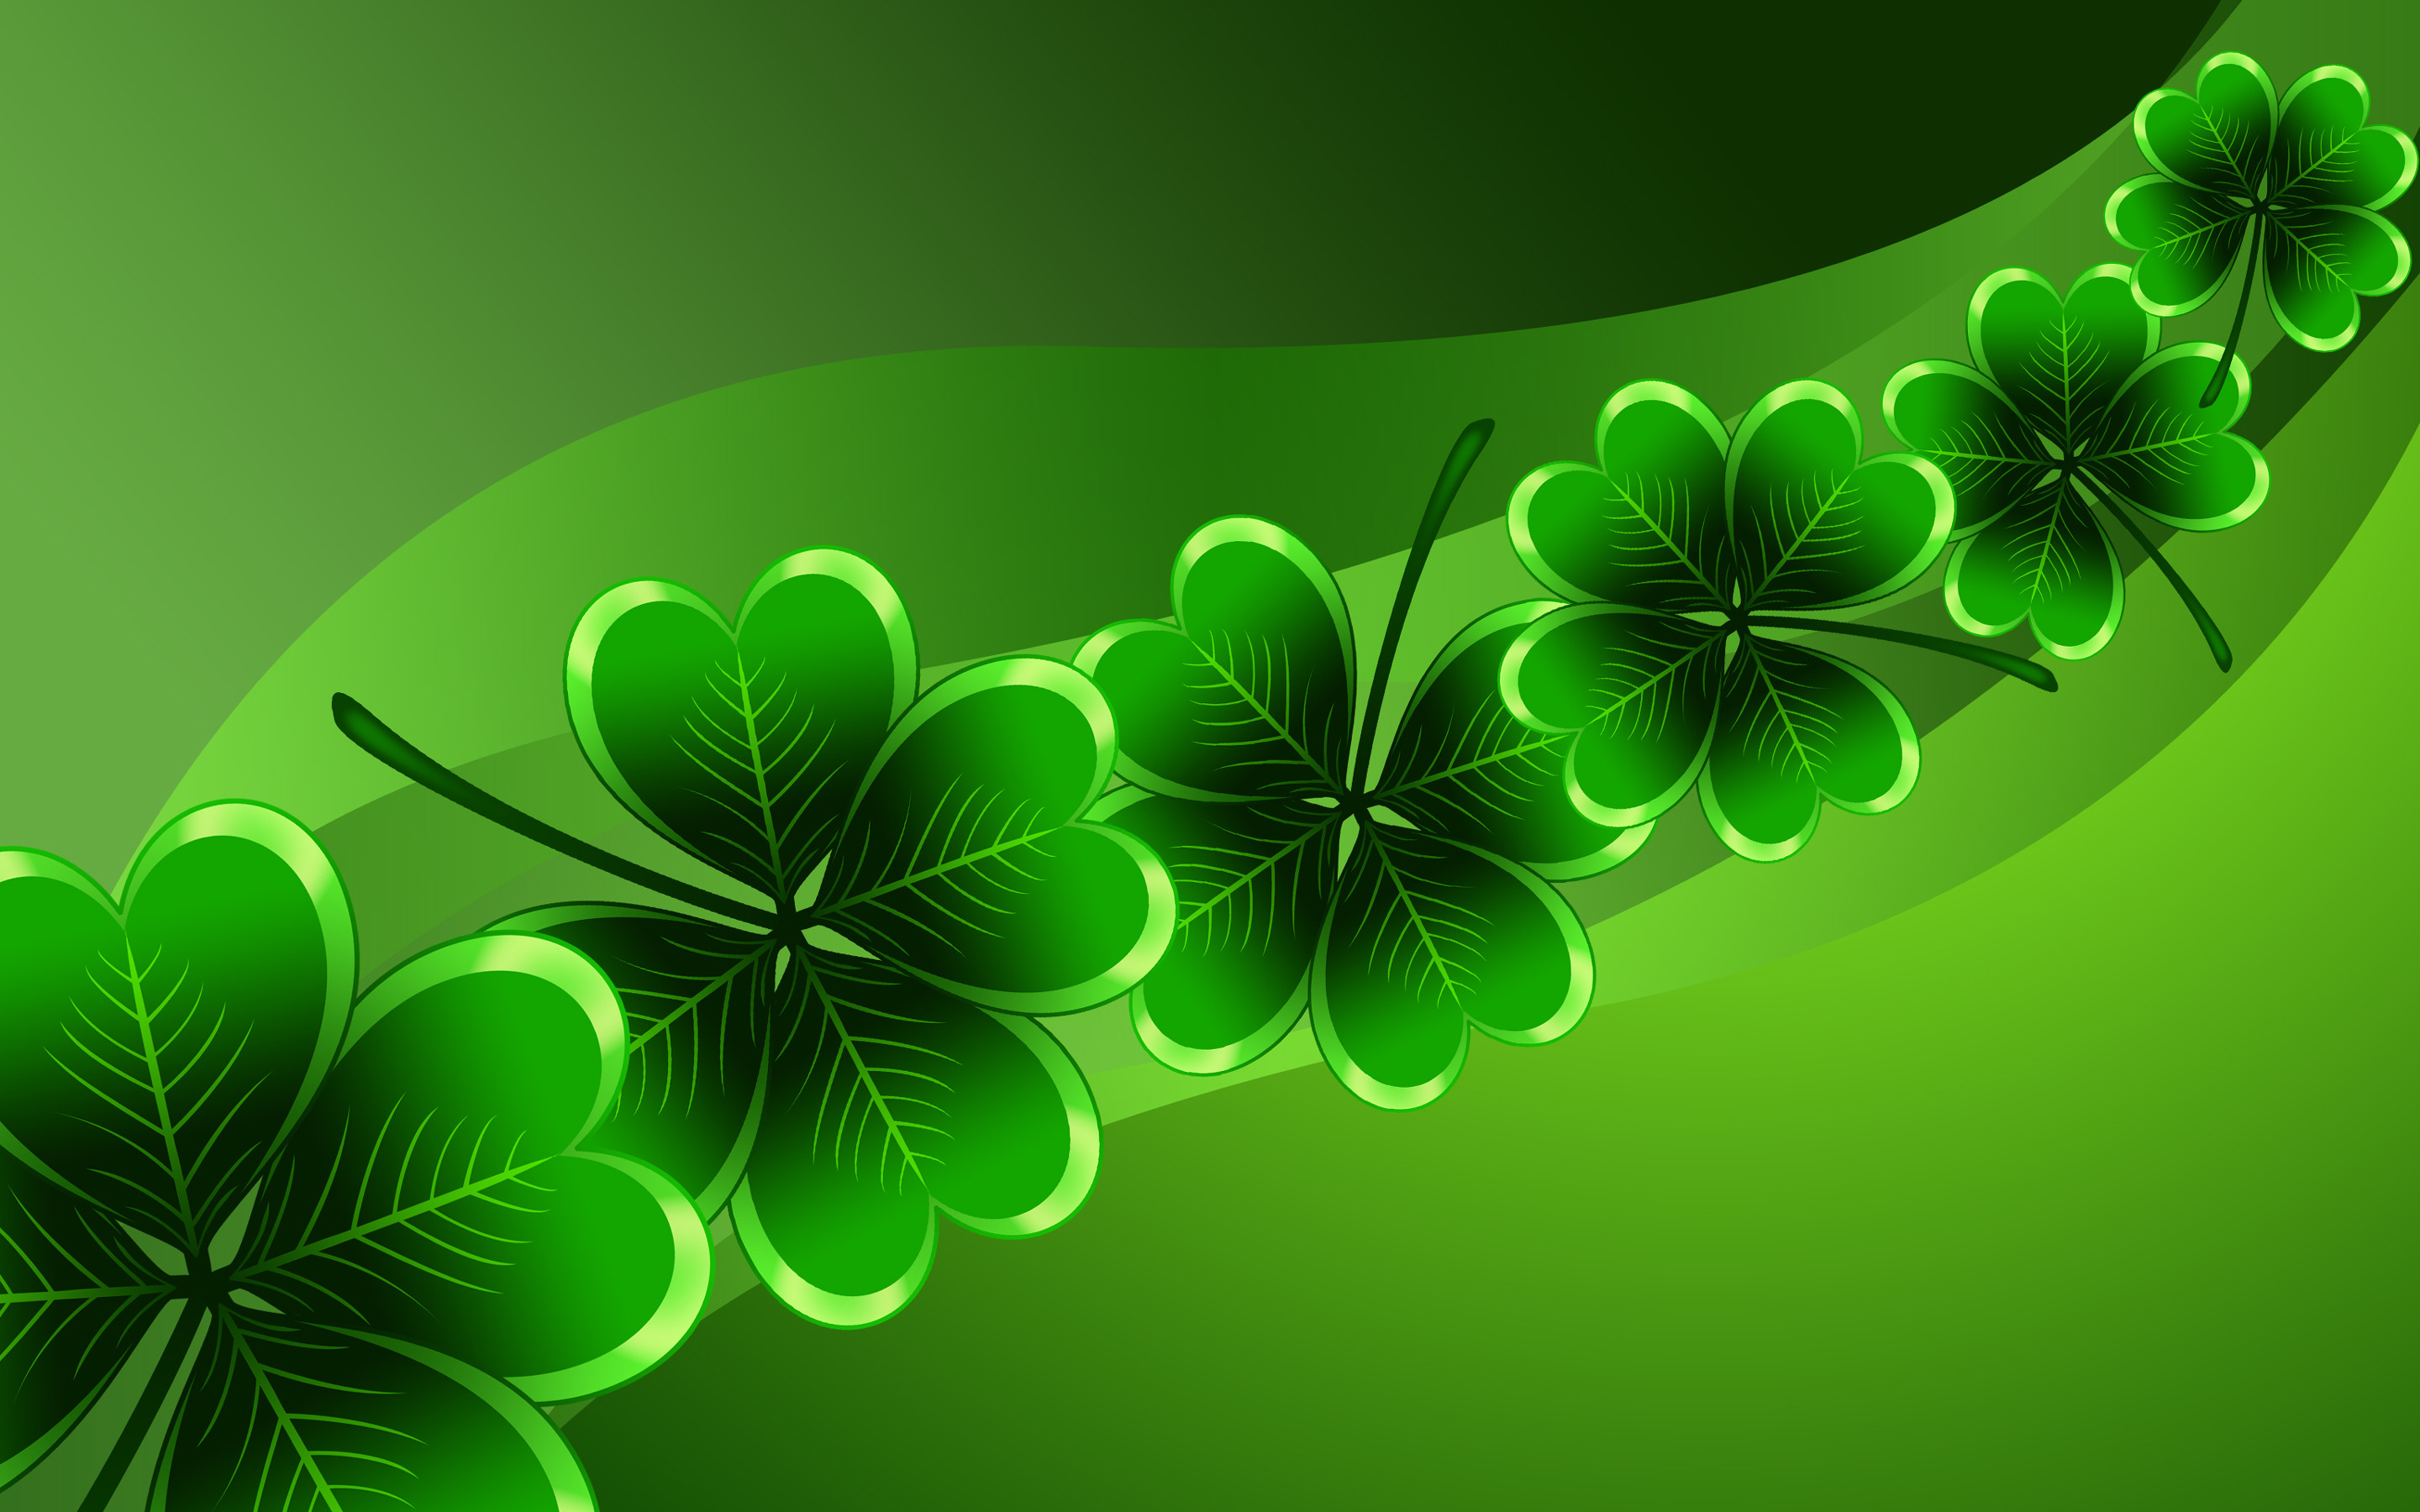 Free St Patrick's Day hd Wallpaper for Desktop Mobile - USA ...